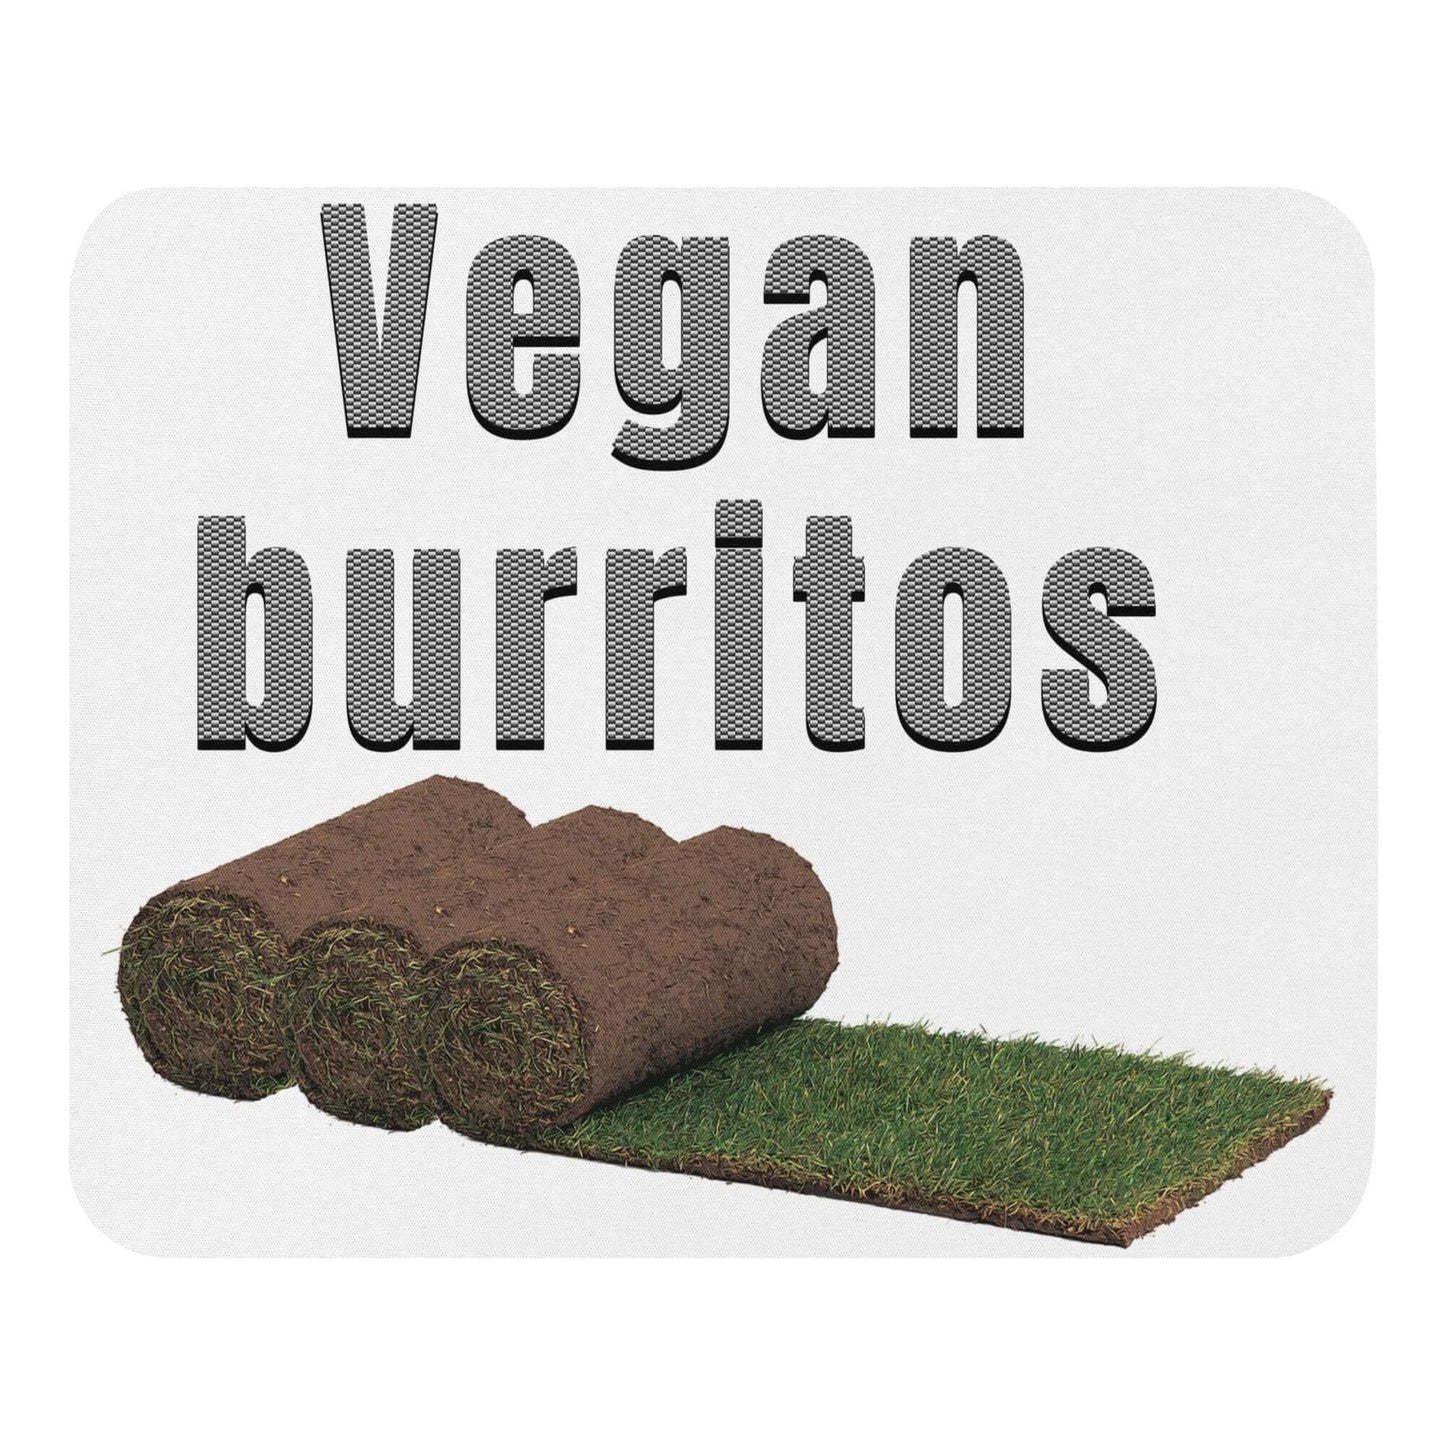 Vegan Burritos - Mouse pad